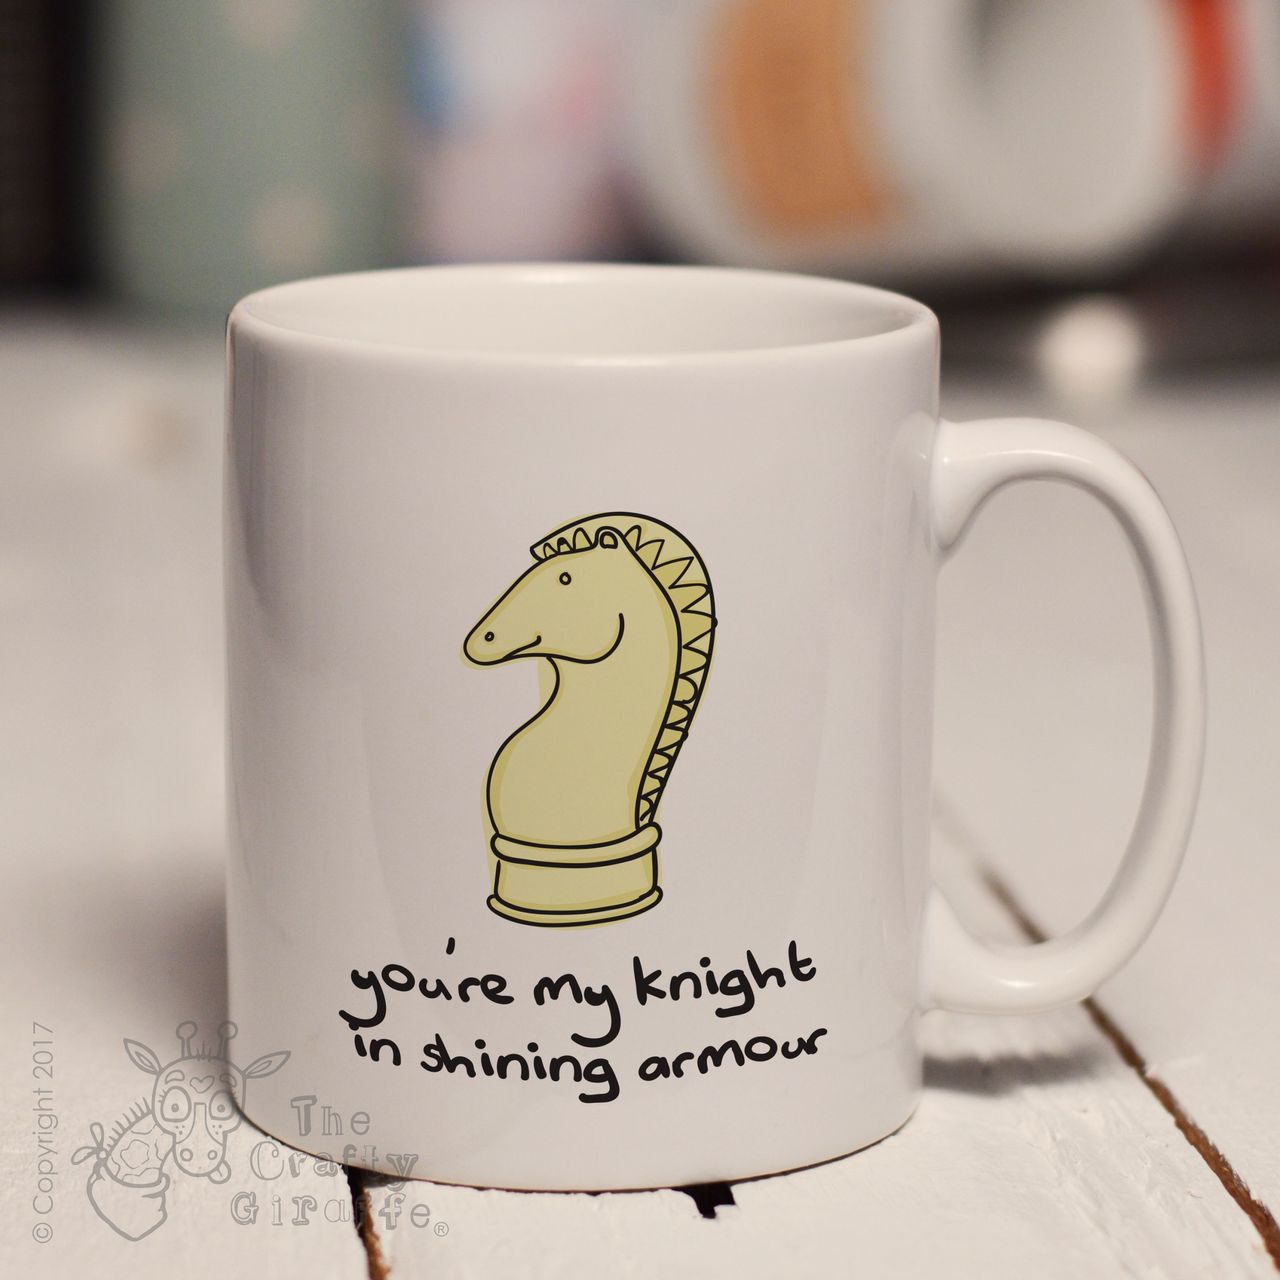 You’re my knight in shining armour mug